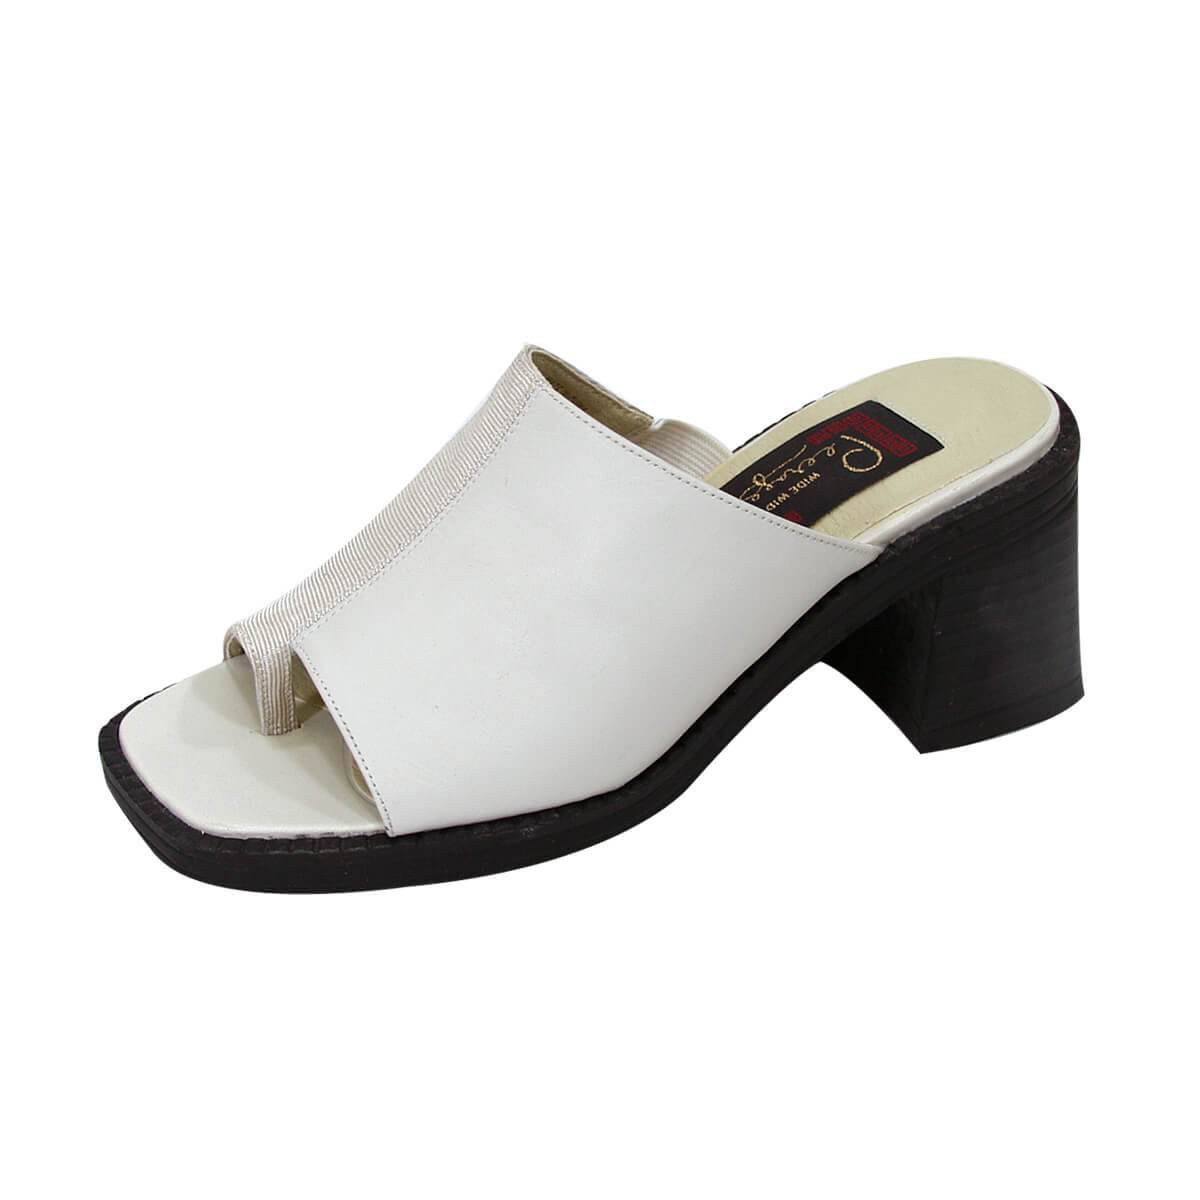 PEERAGE Adeline Women's Wide Width Leather Heeled Sandals